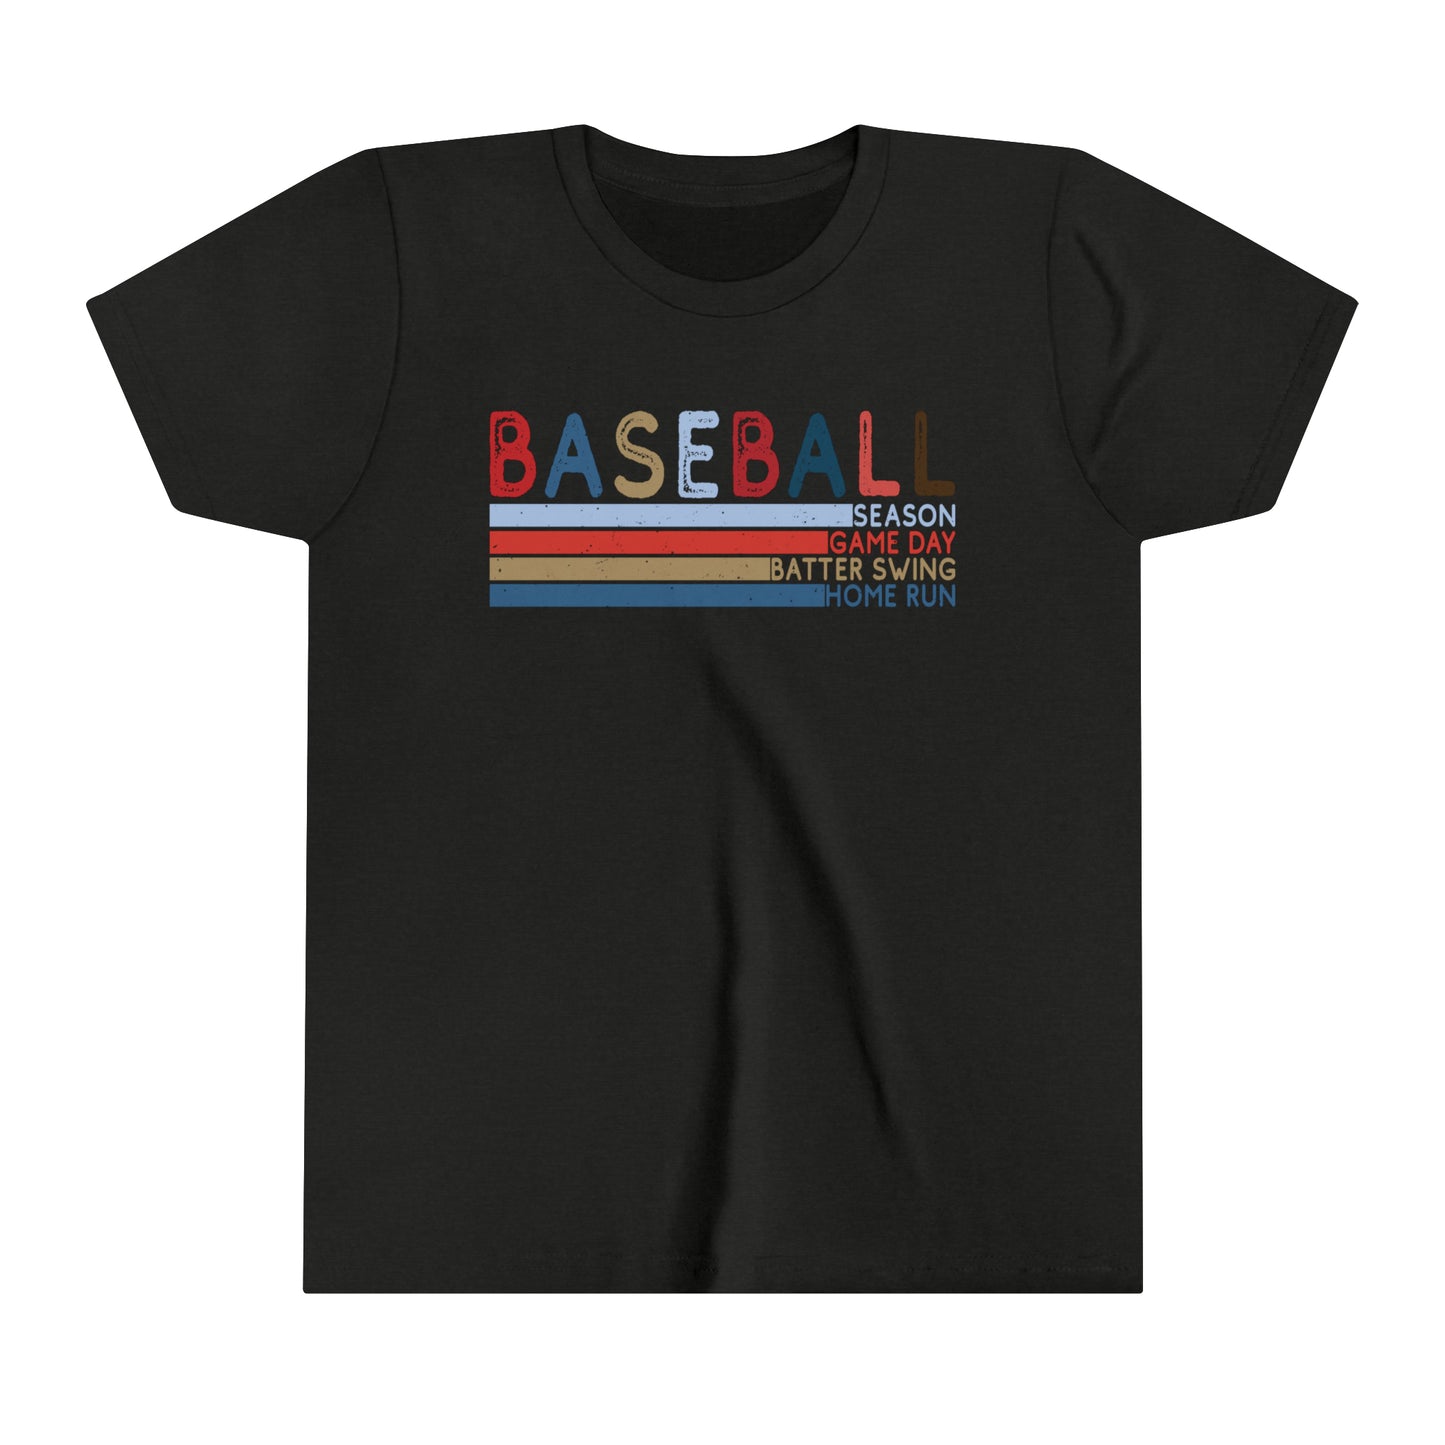 Baseball Boy's Youth Shirt